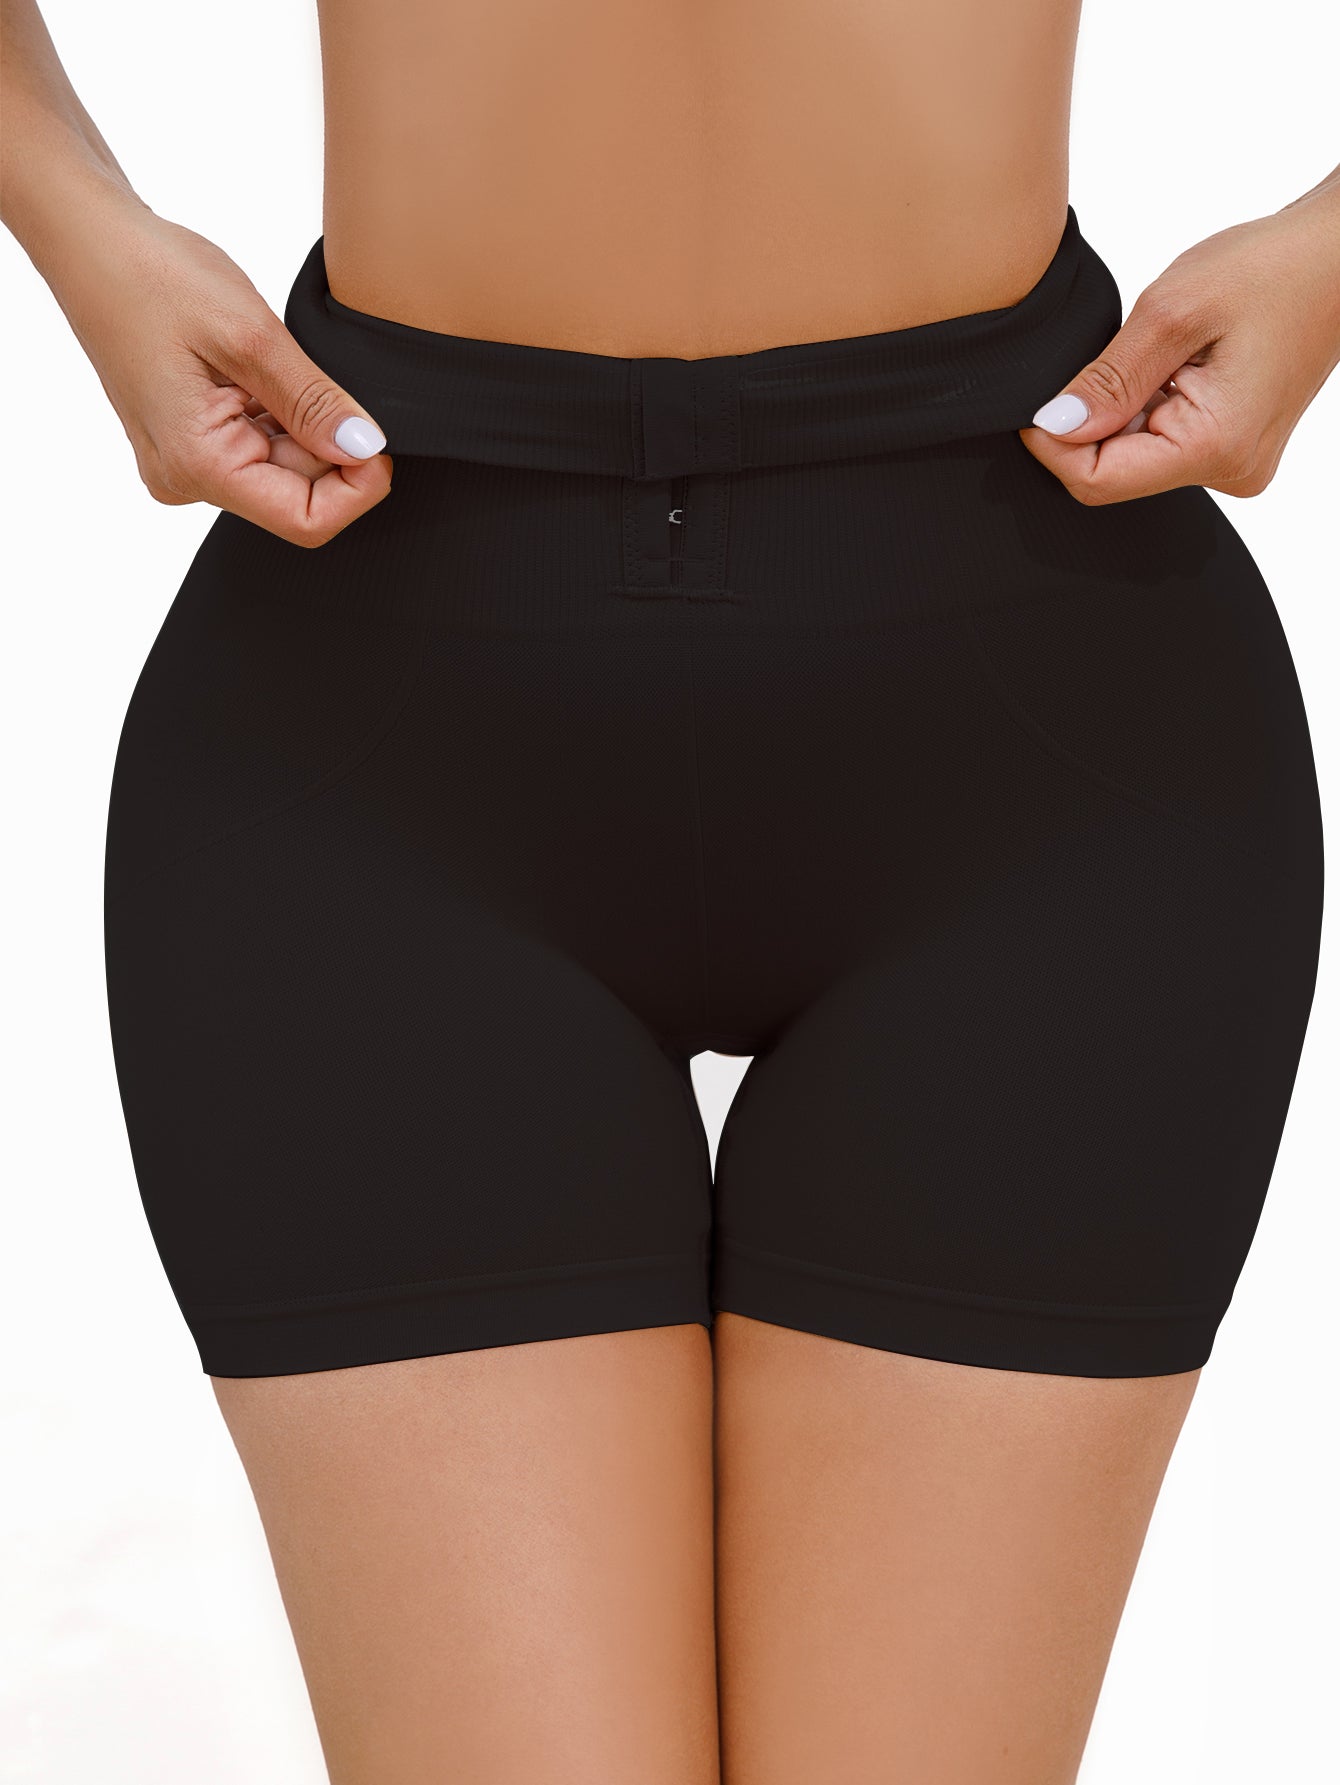 Women shapewear tummy control shorts